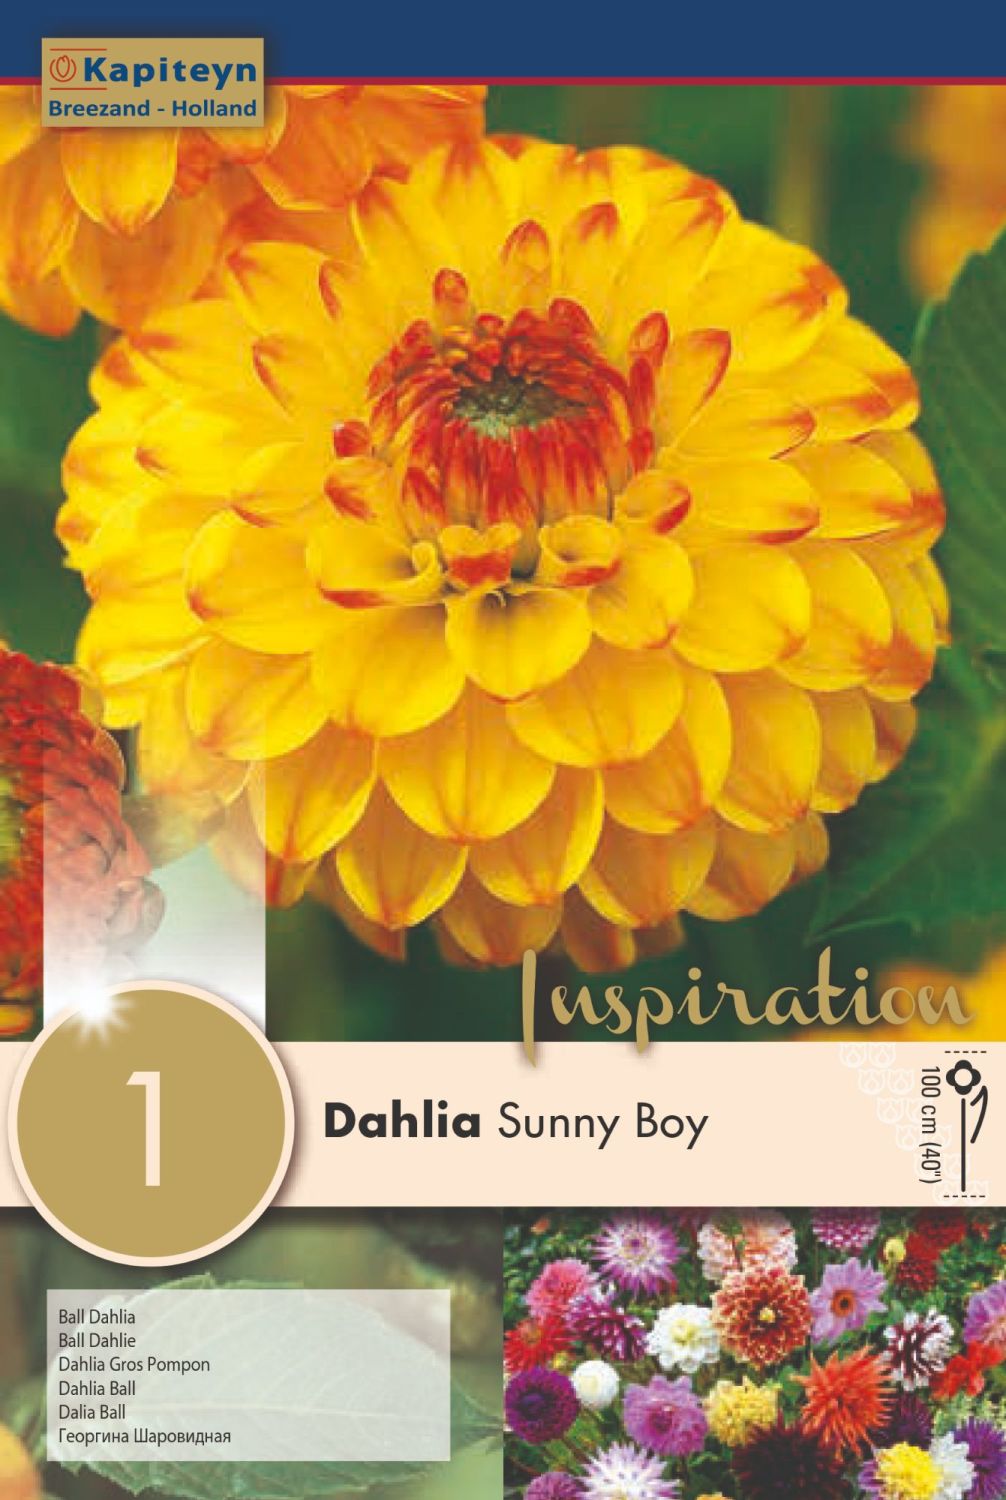 DAHLIA SUNNY BOY